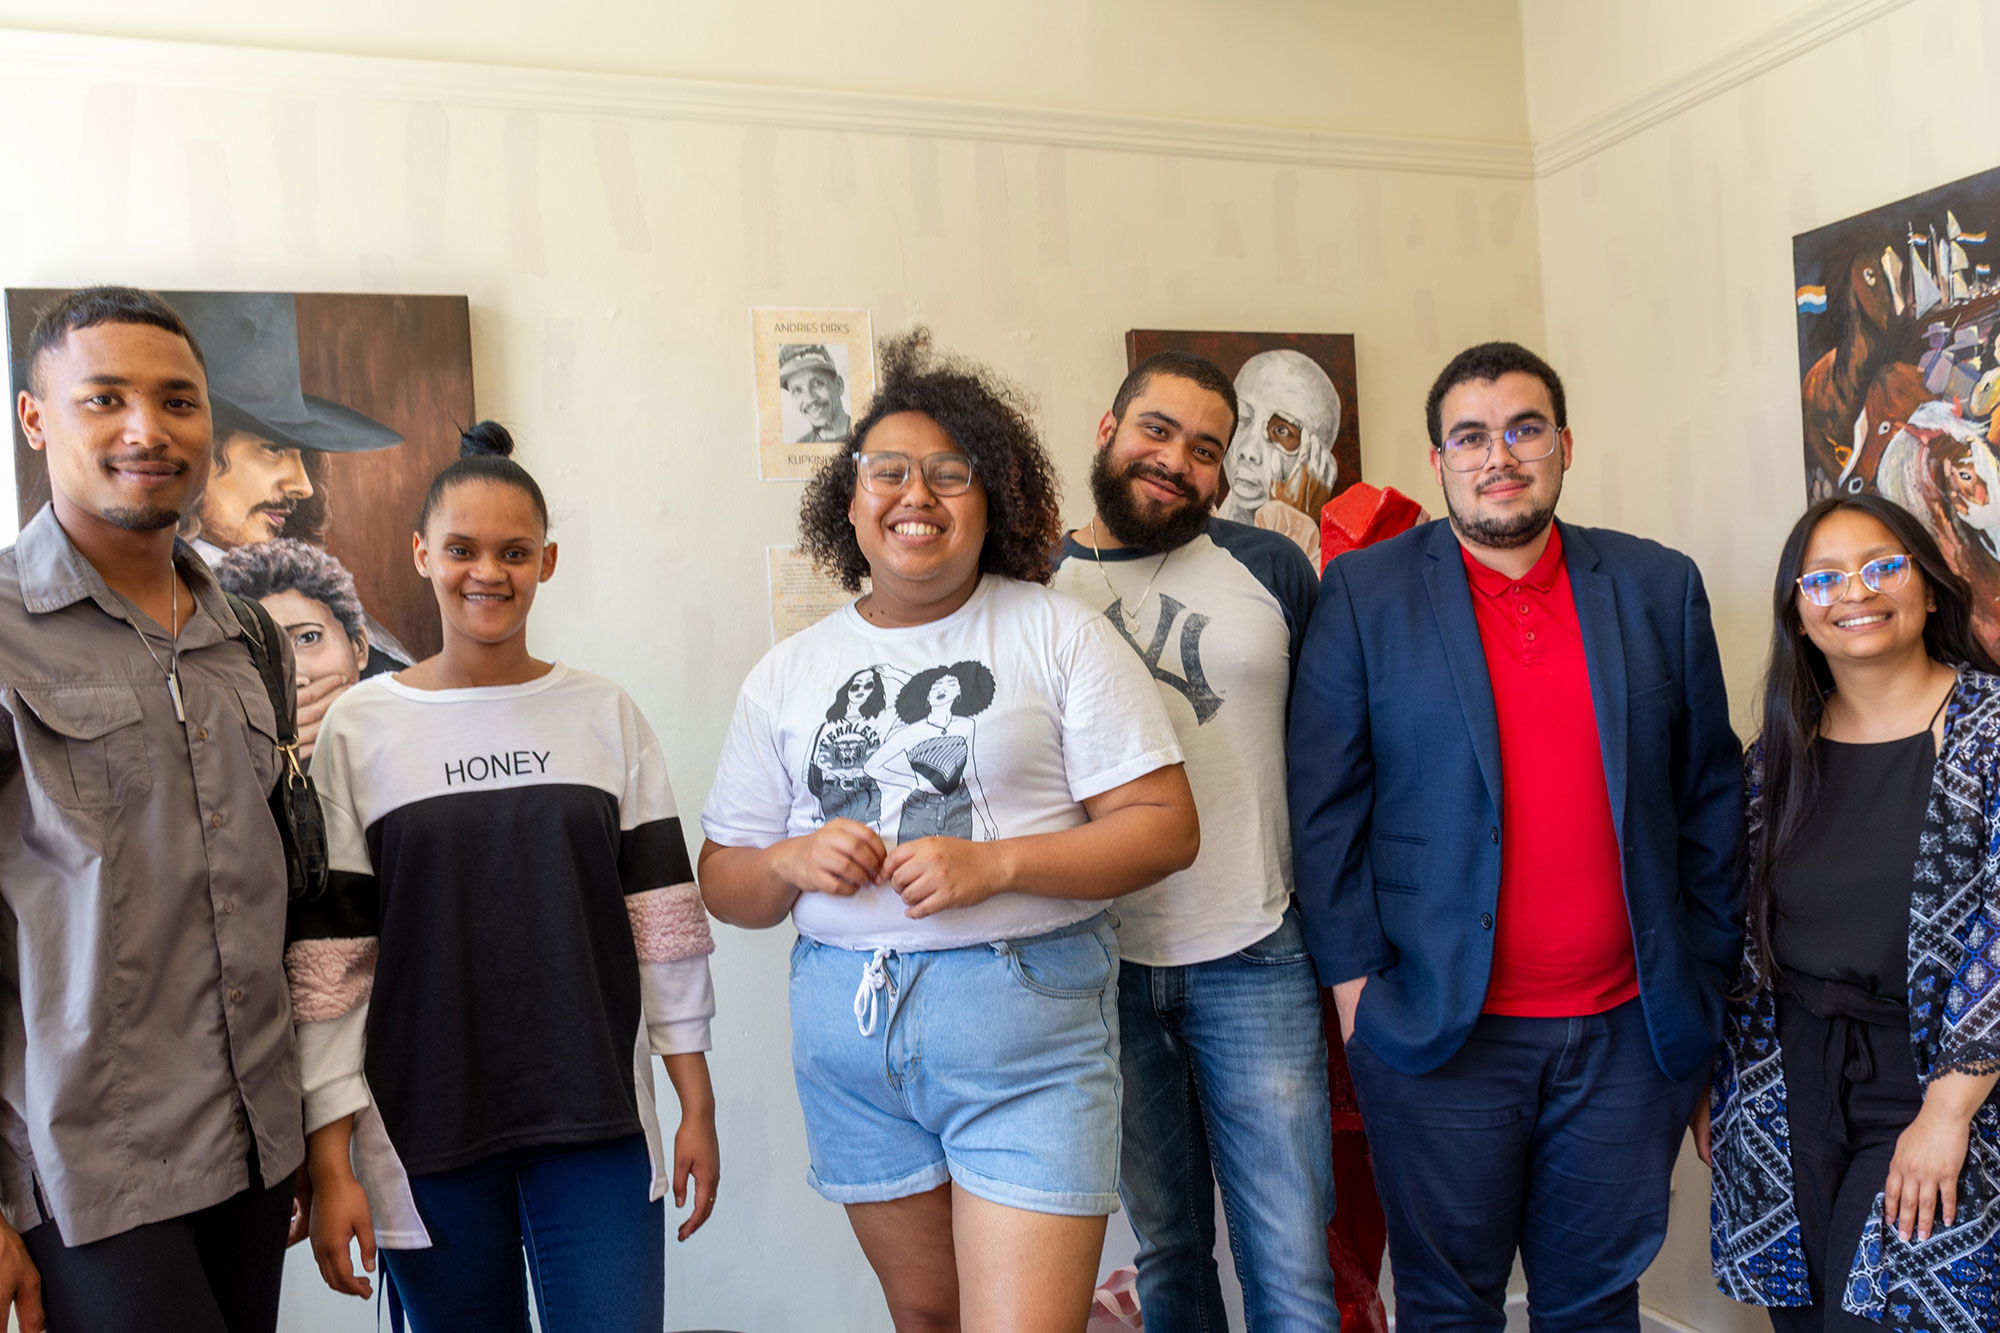 UCT alumni social enterprise aims to disrupt the arts education landscape in SA